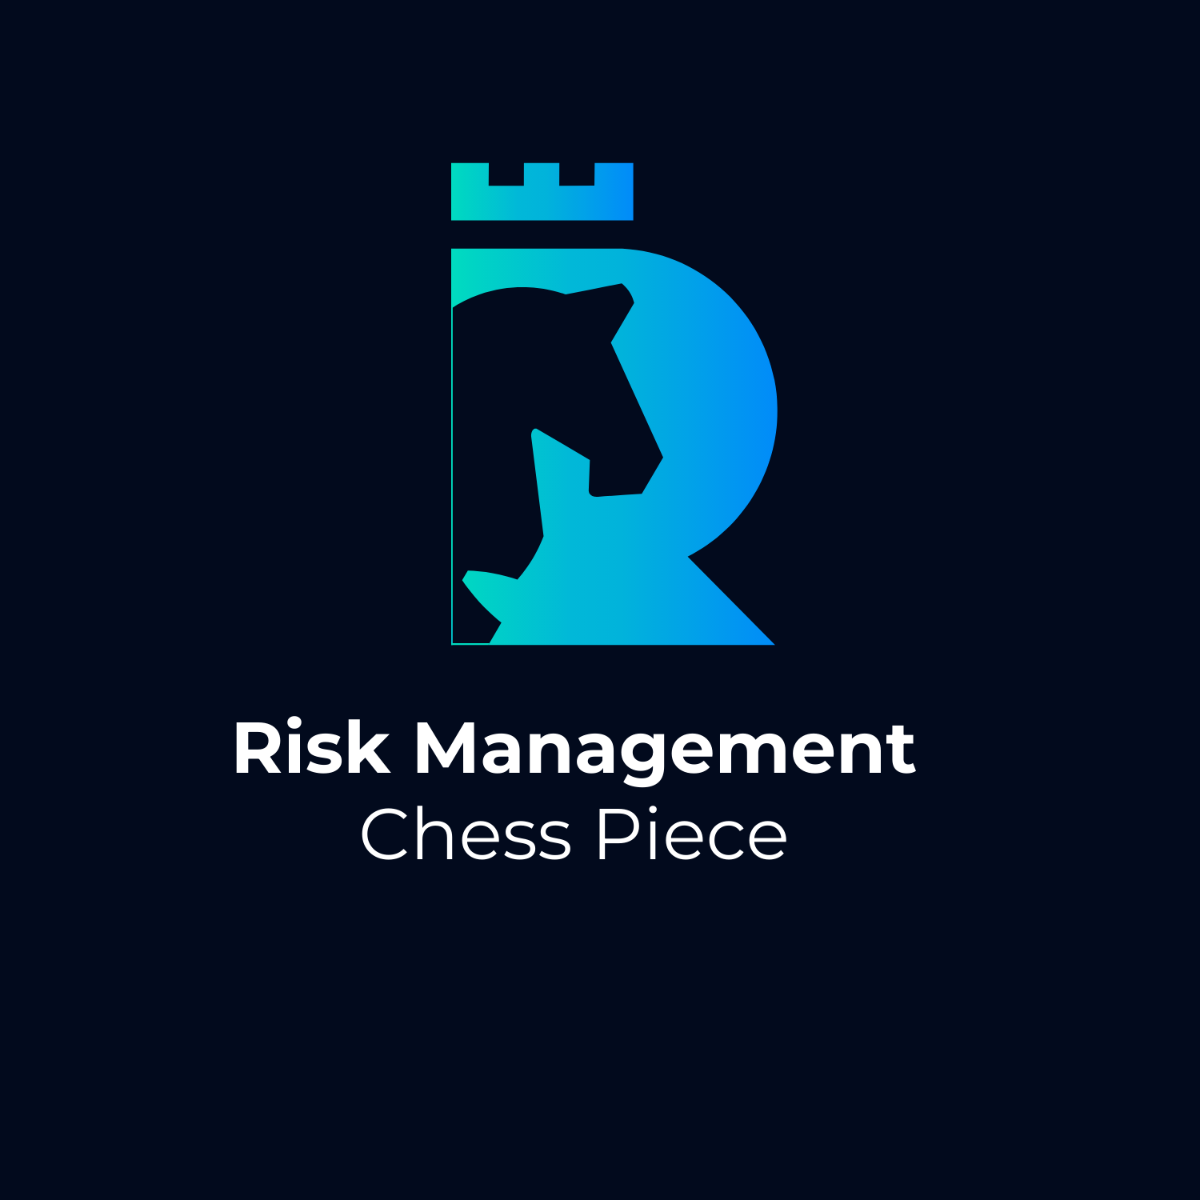 Risk Management Chess Piece Logo Template